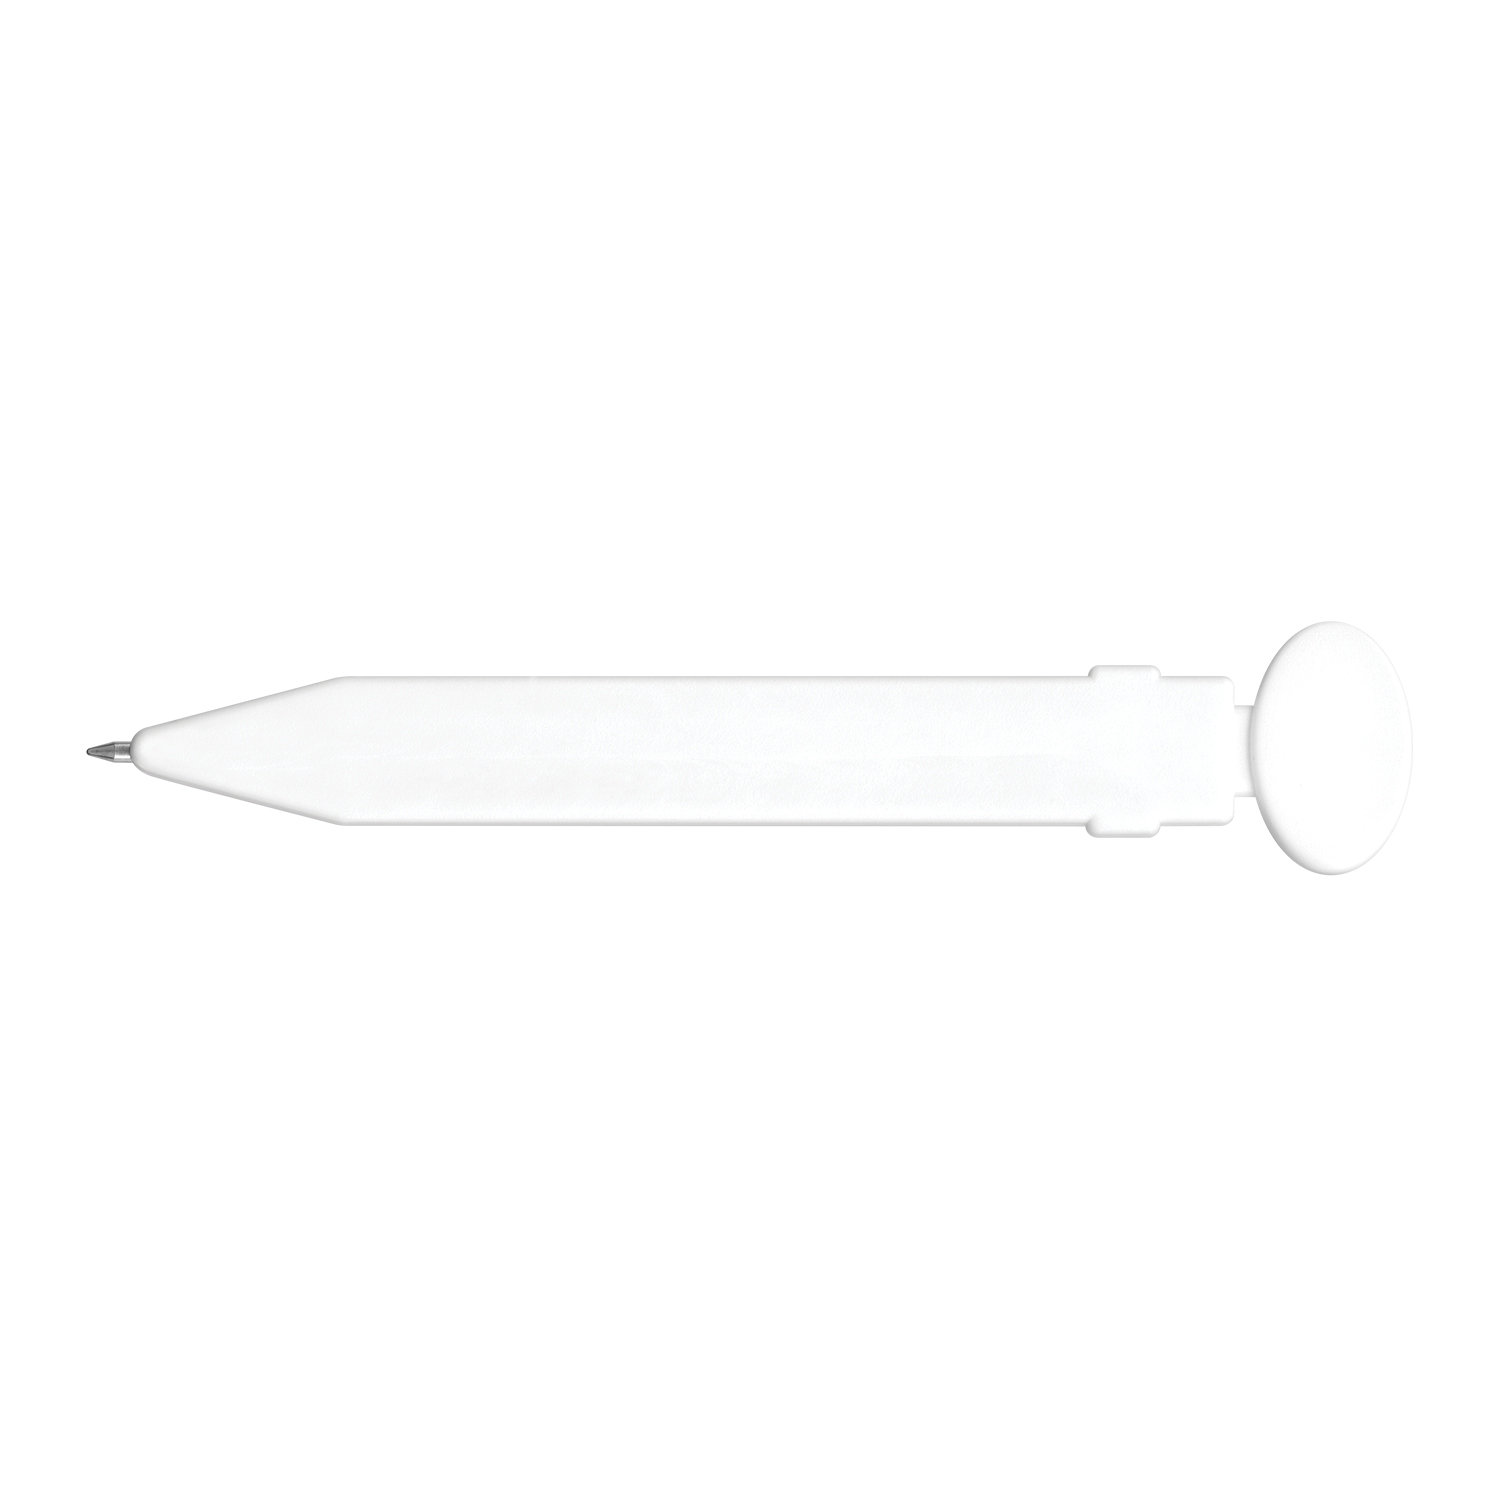 Pen - Magna Fridge Pen - Blank Pen